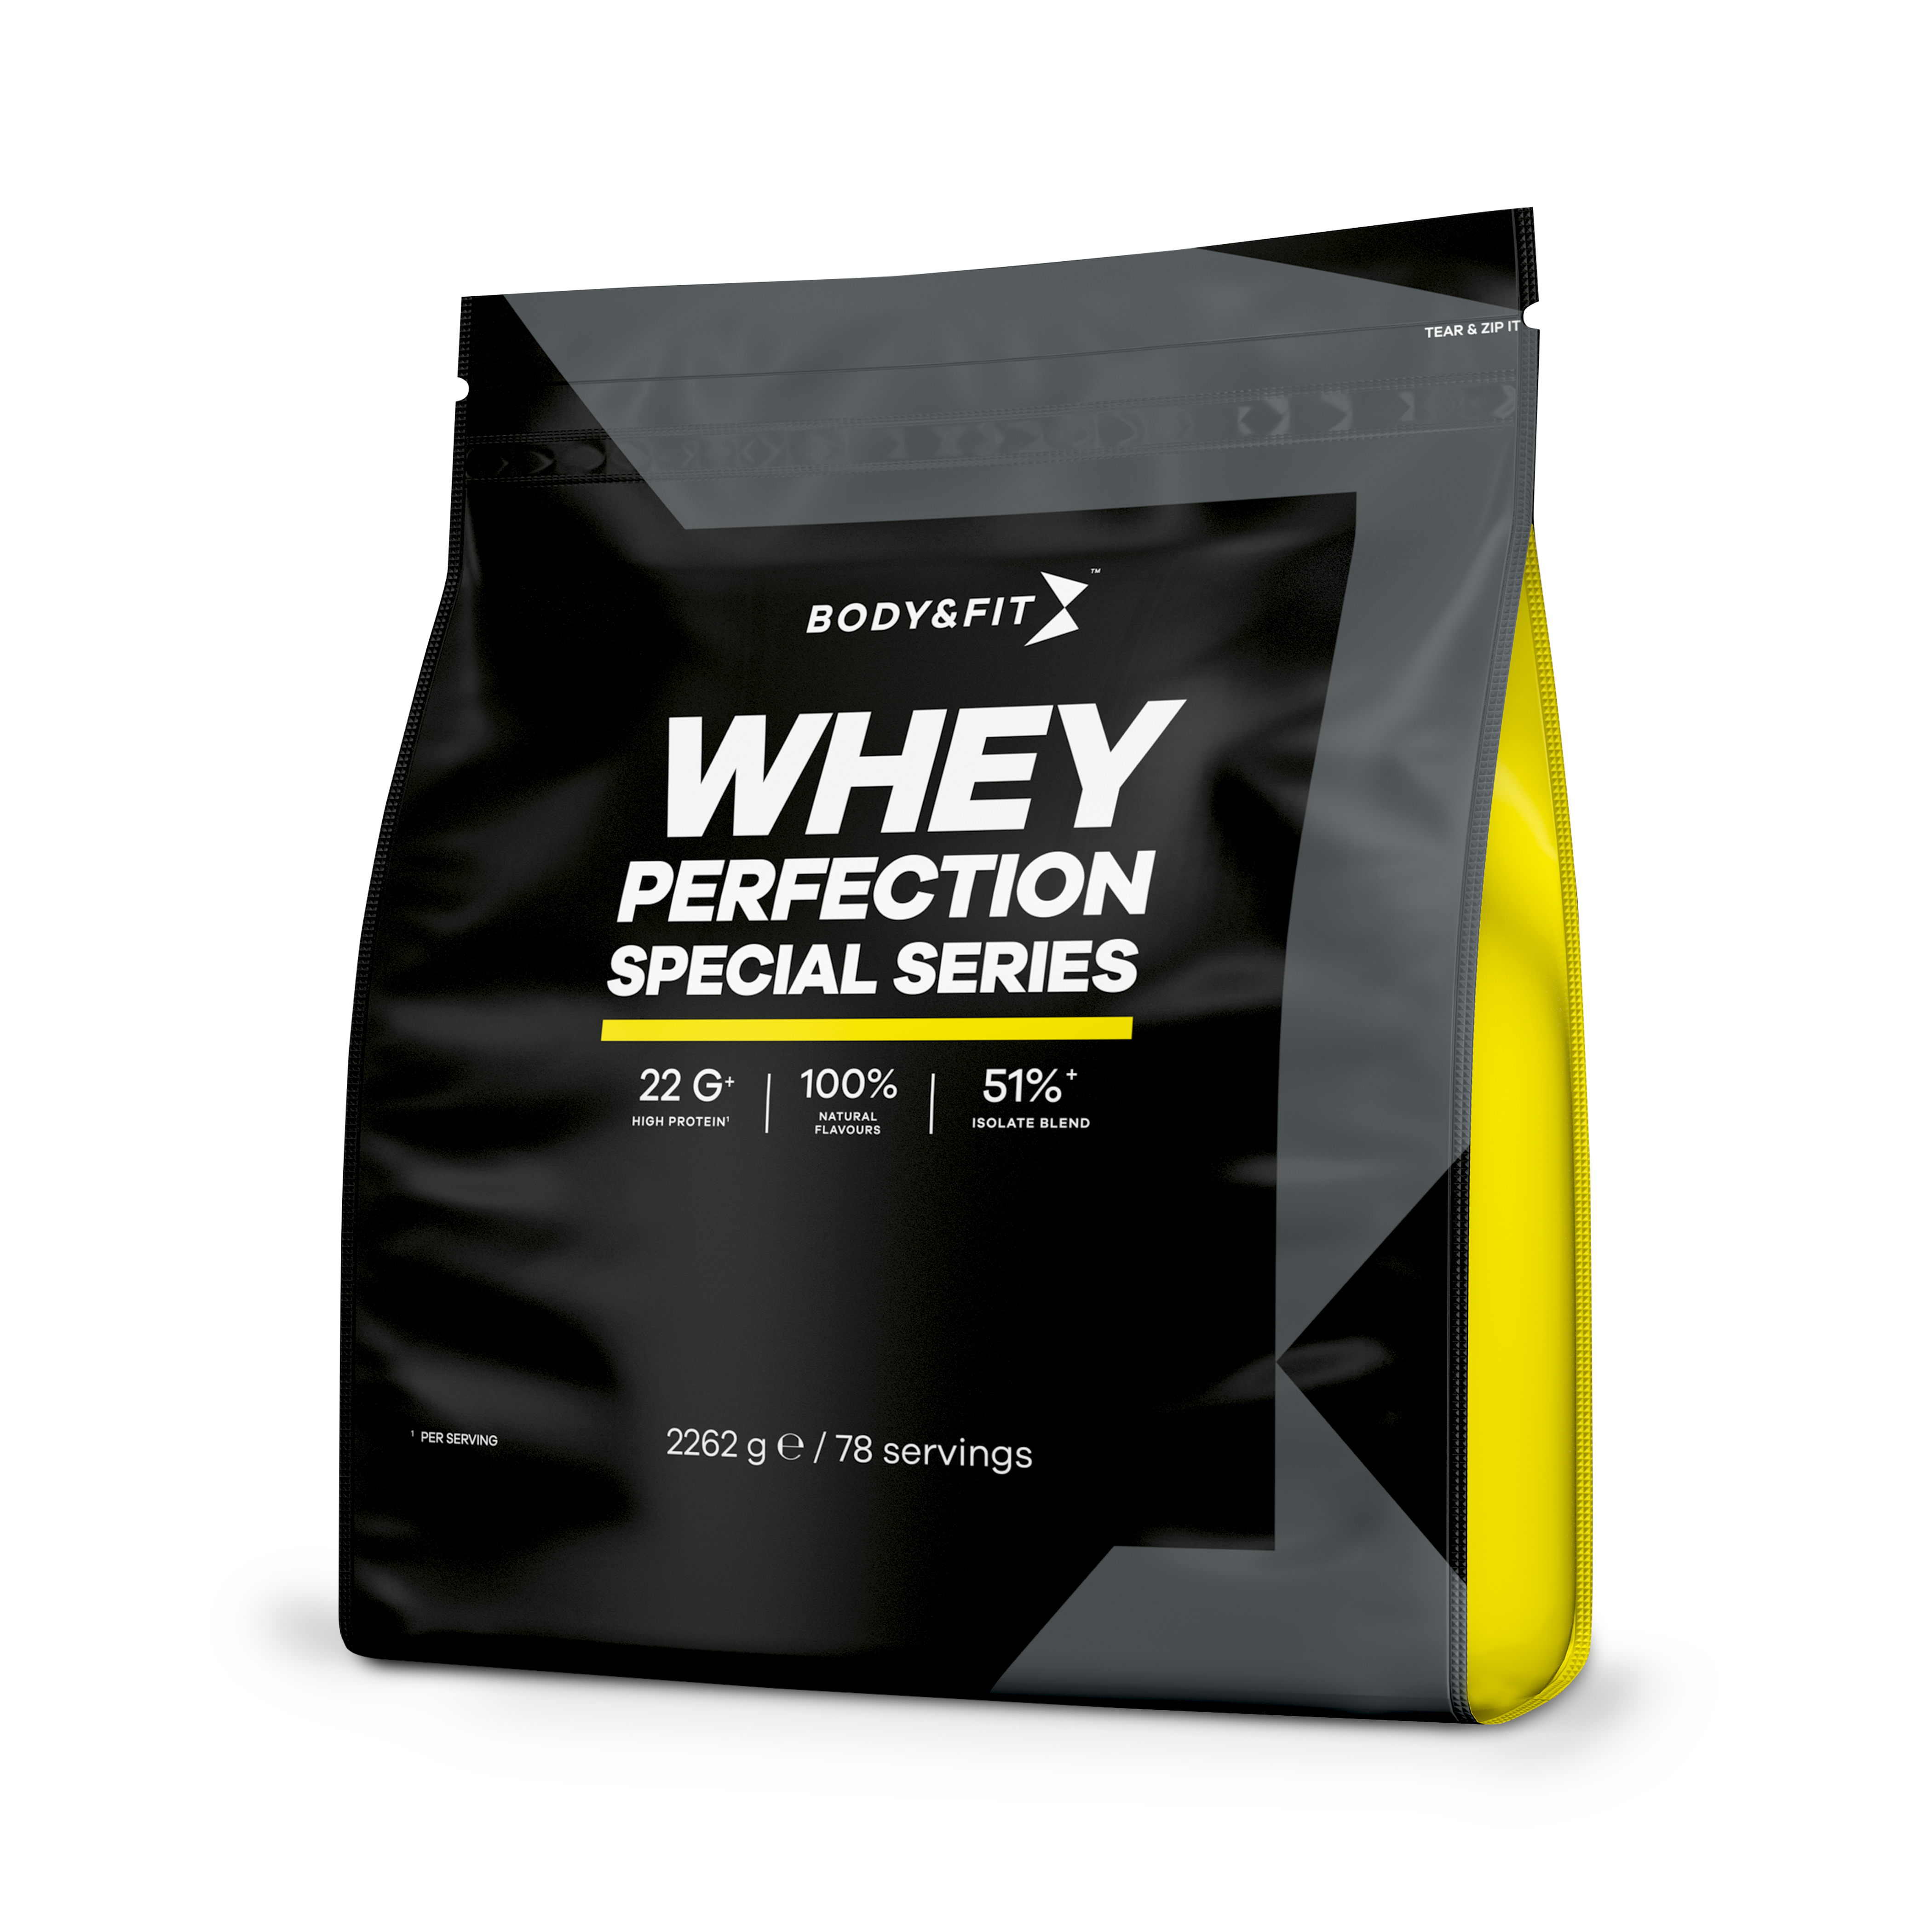 Body & Fit Whey Perfection Special Series - Proteine Poeder / Whey Protein - Eiwitshake - 2268 gram (81 shakes) - Aardbei/Banaan